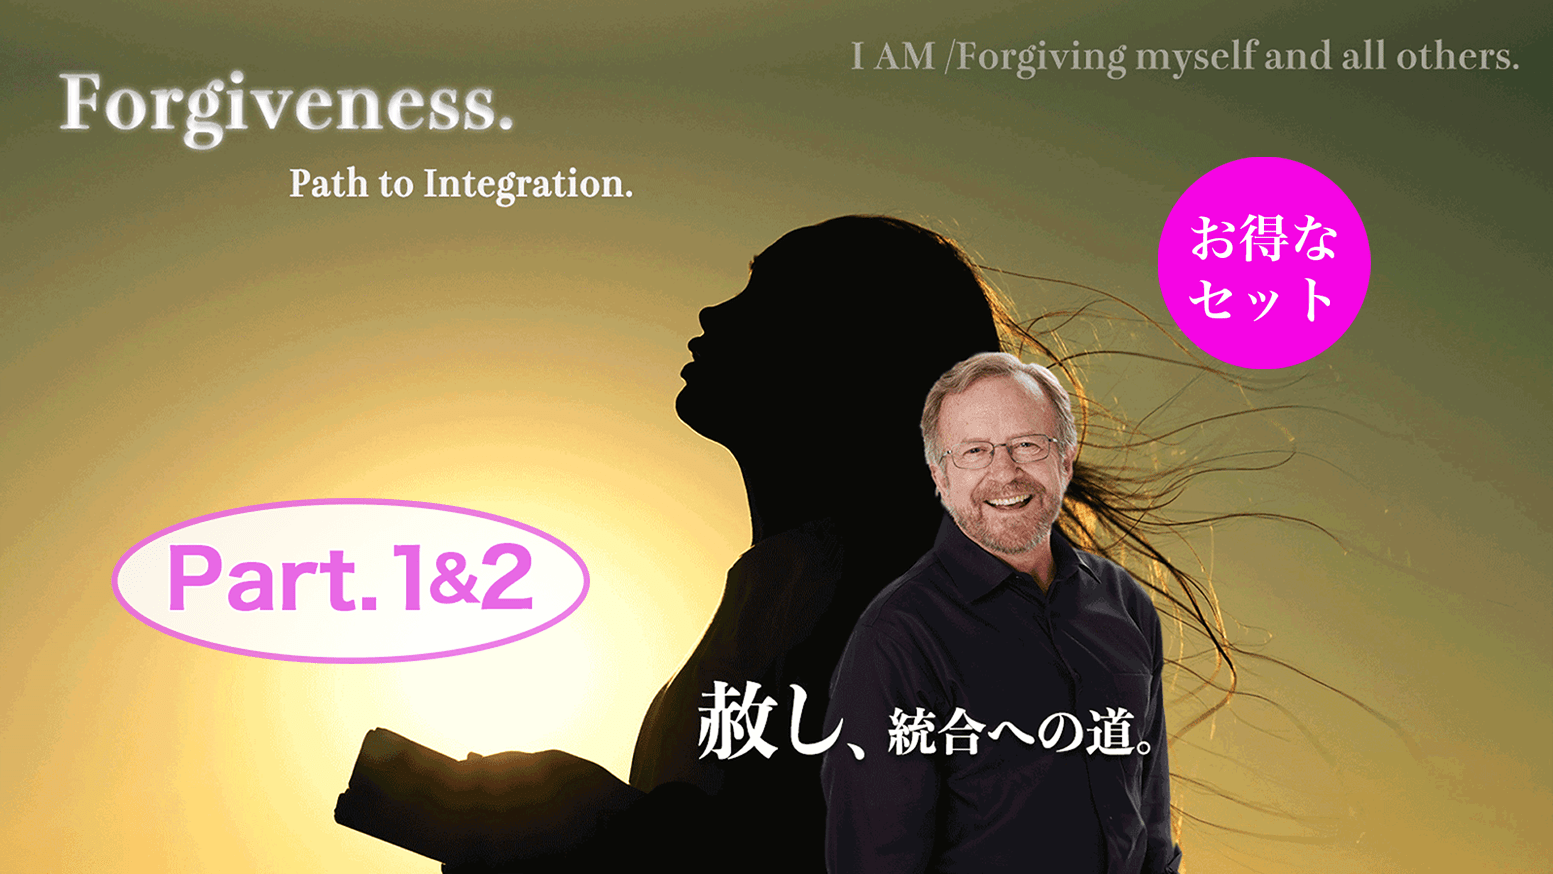 《Part.1,2セット》赦し、統合への道〜Forgiveness path to integration